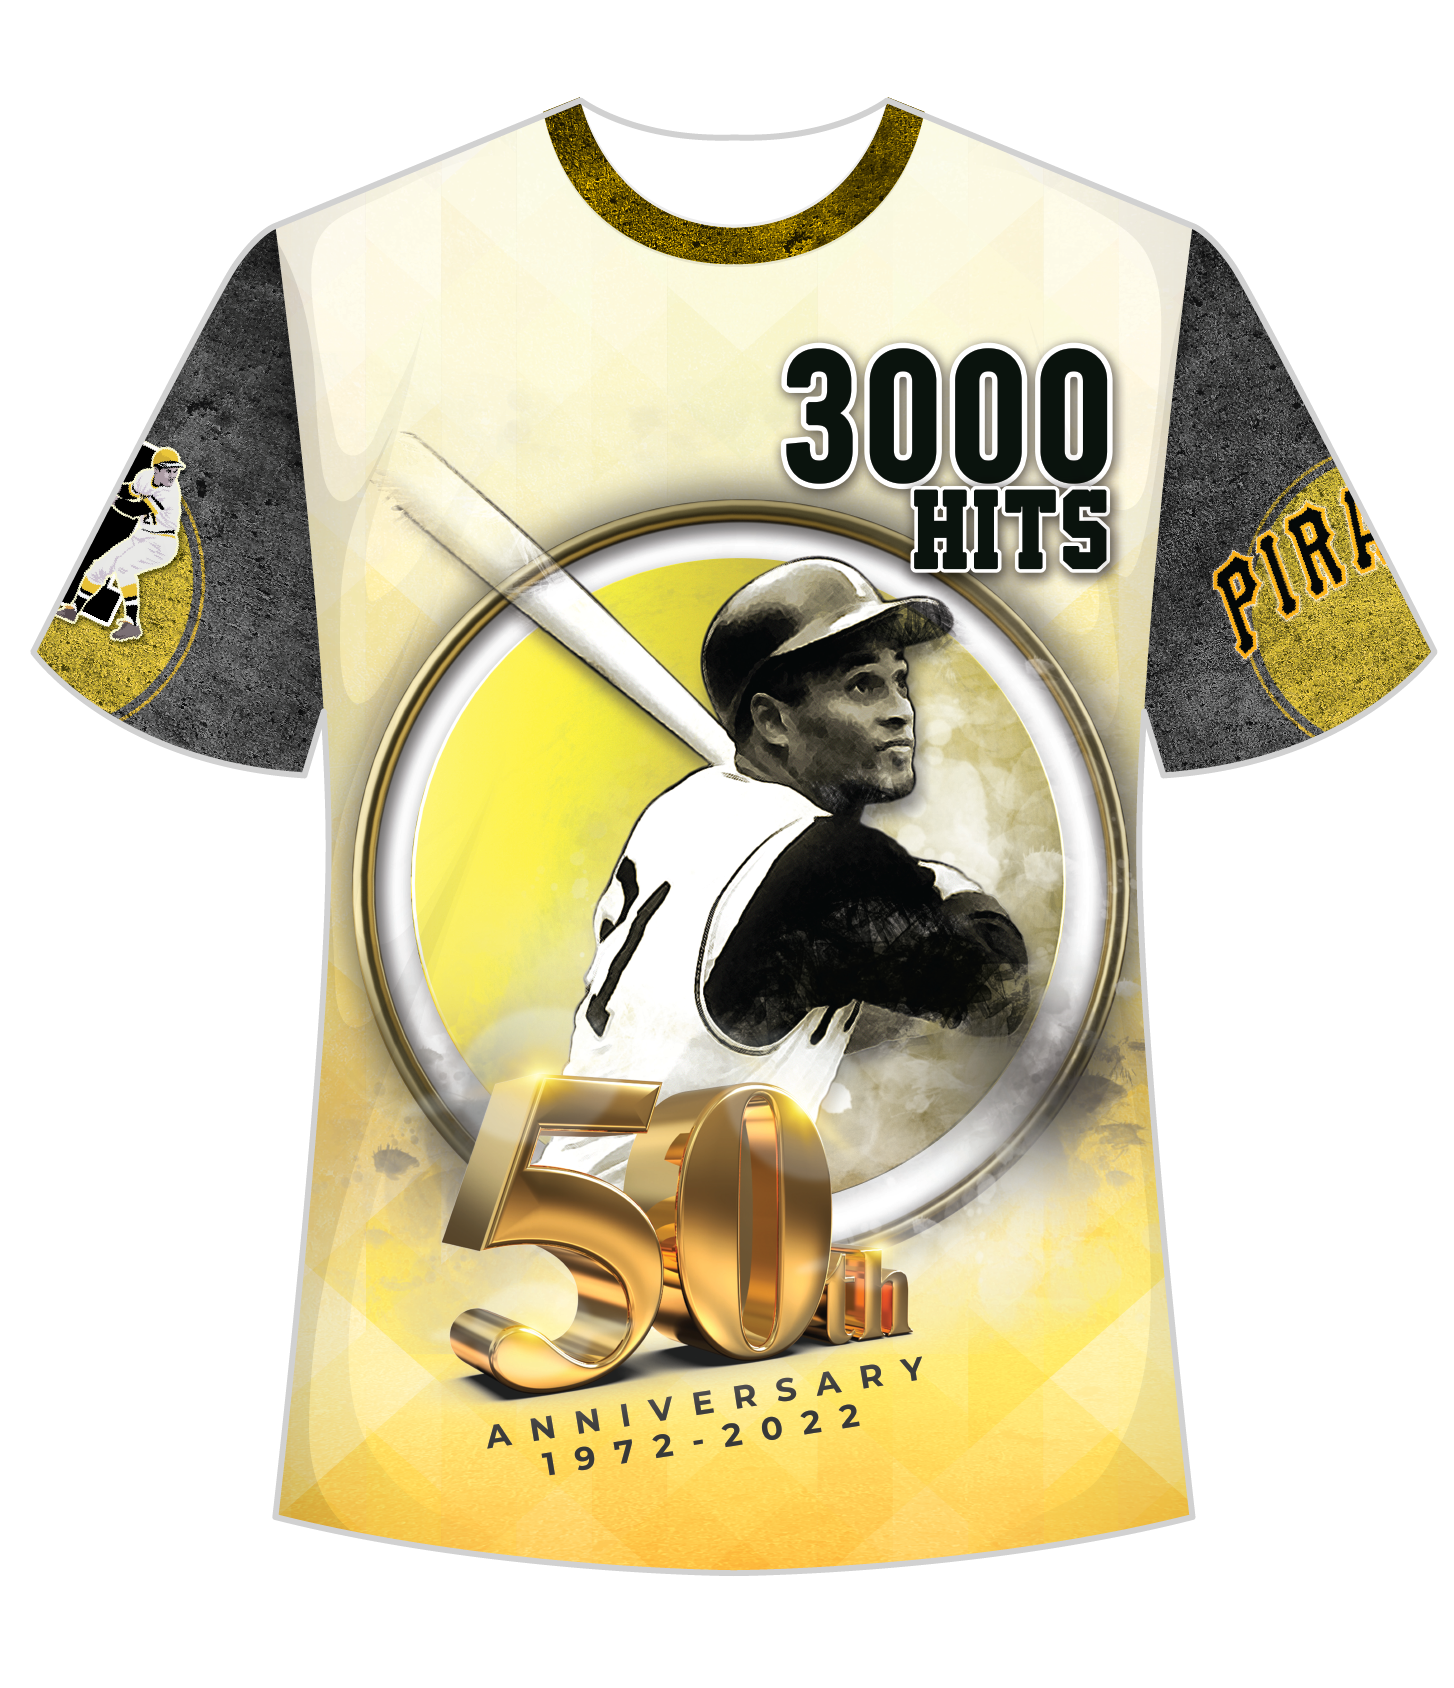 *50th Aniversario 3000 Hits Roberto Clemente